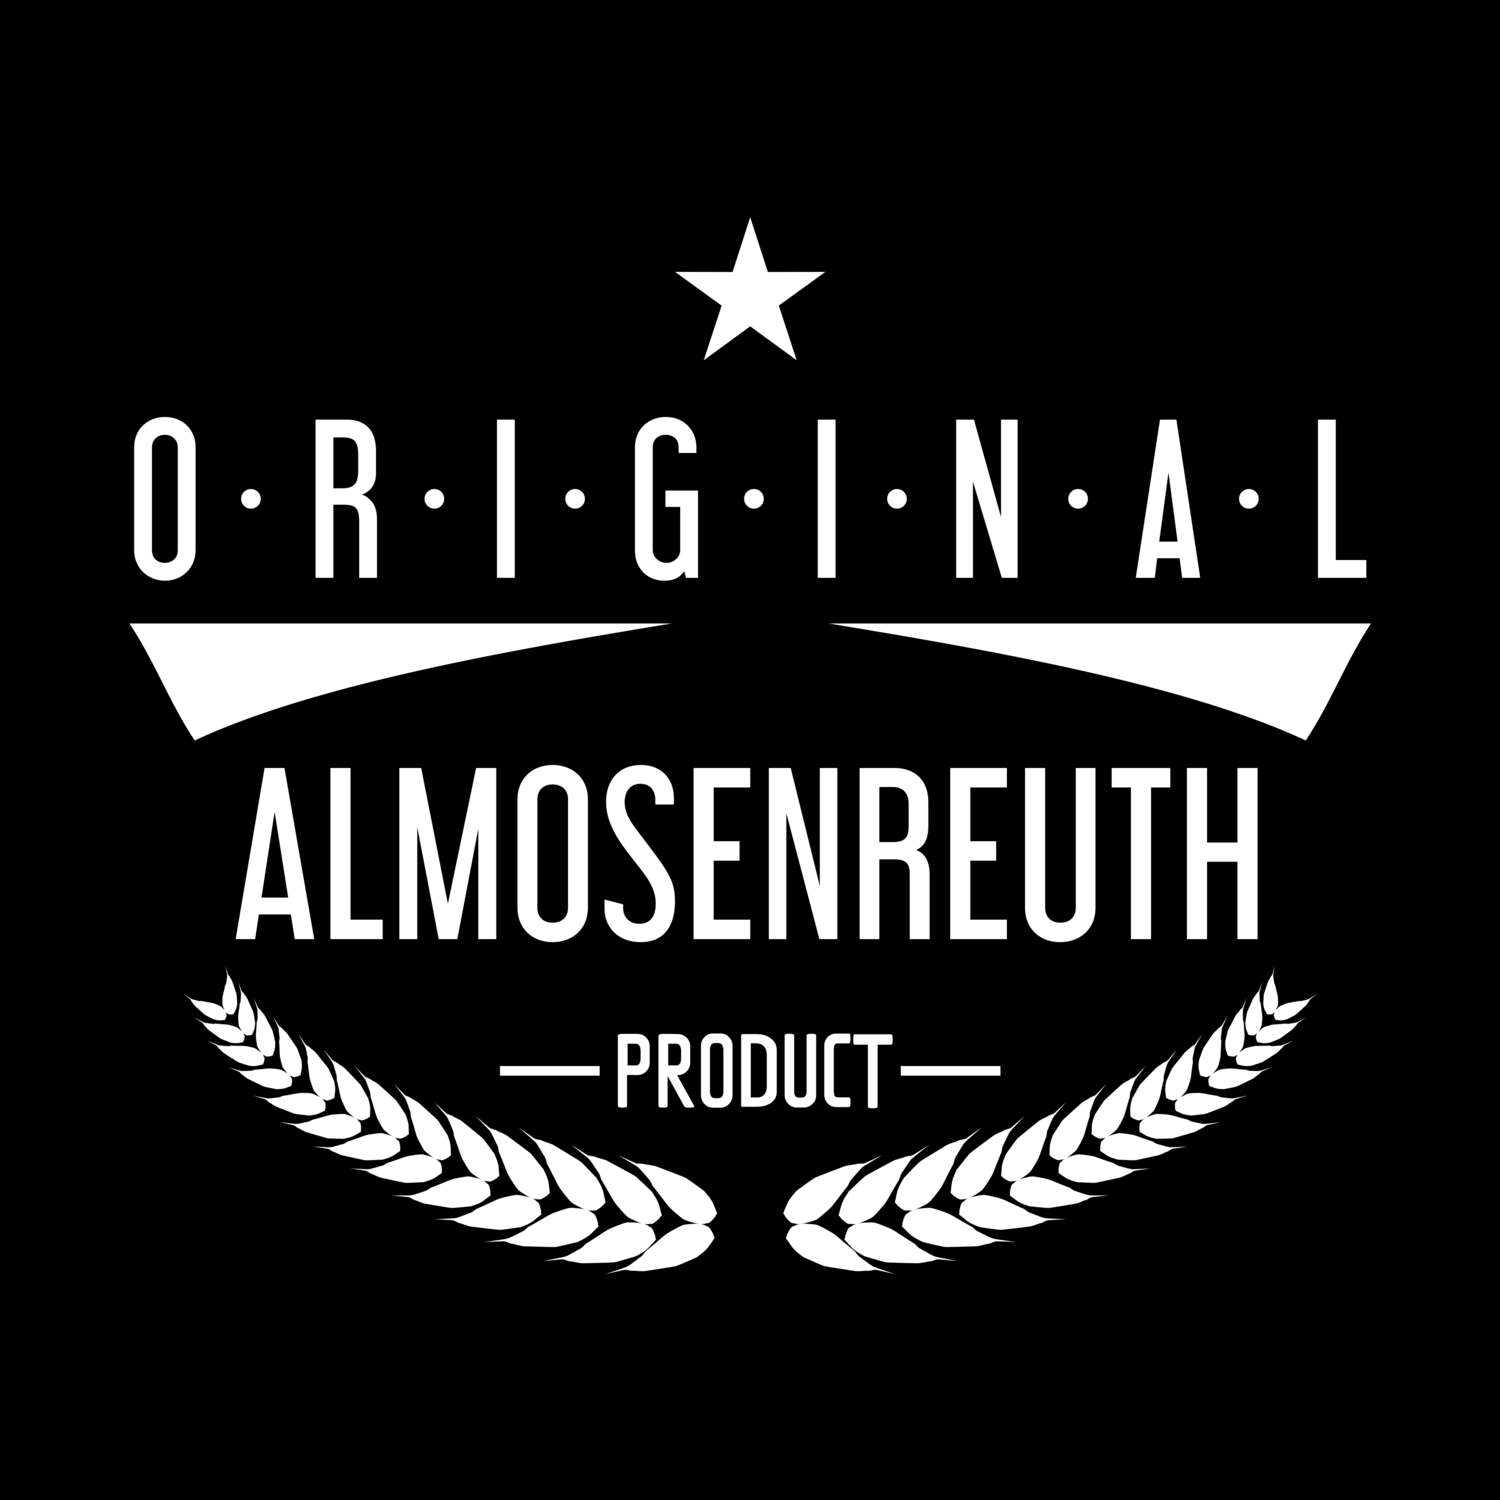 Almosenreuth T-Shirt »Original Product«